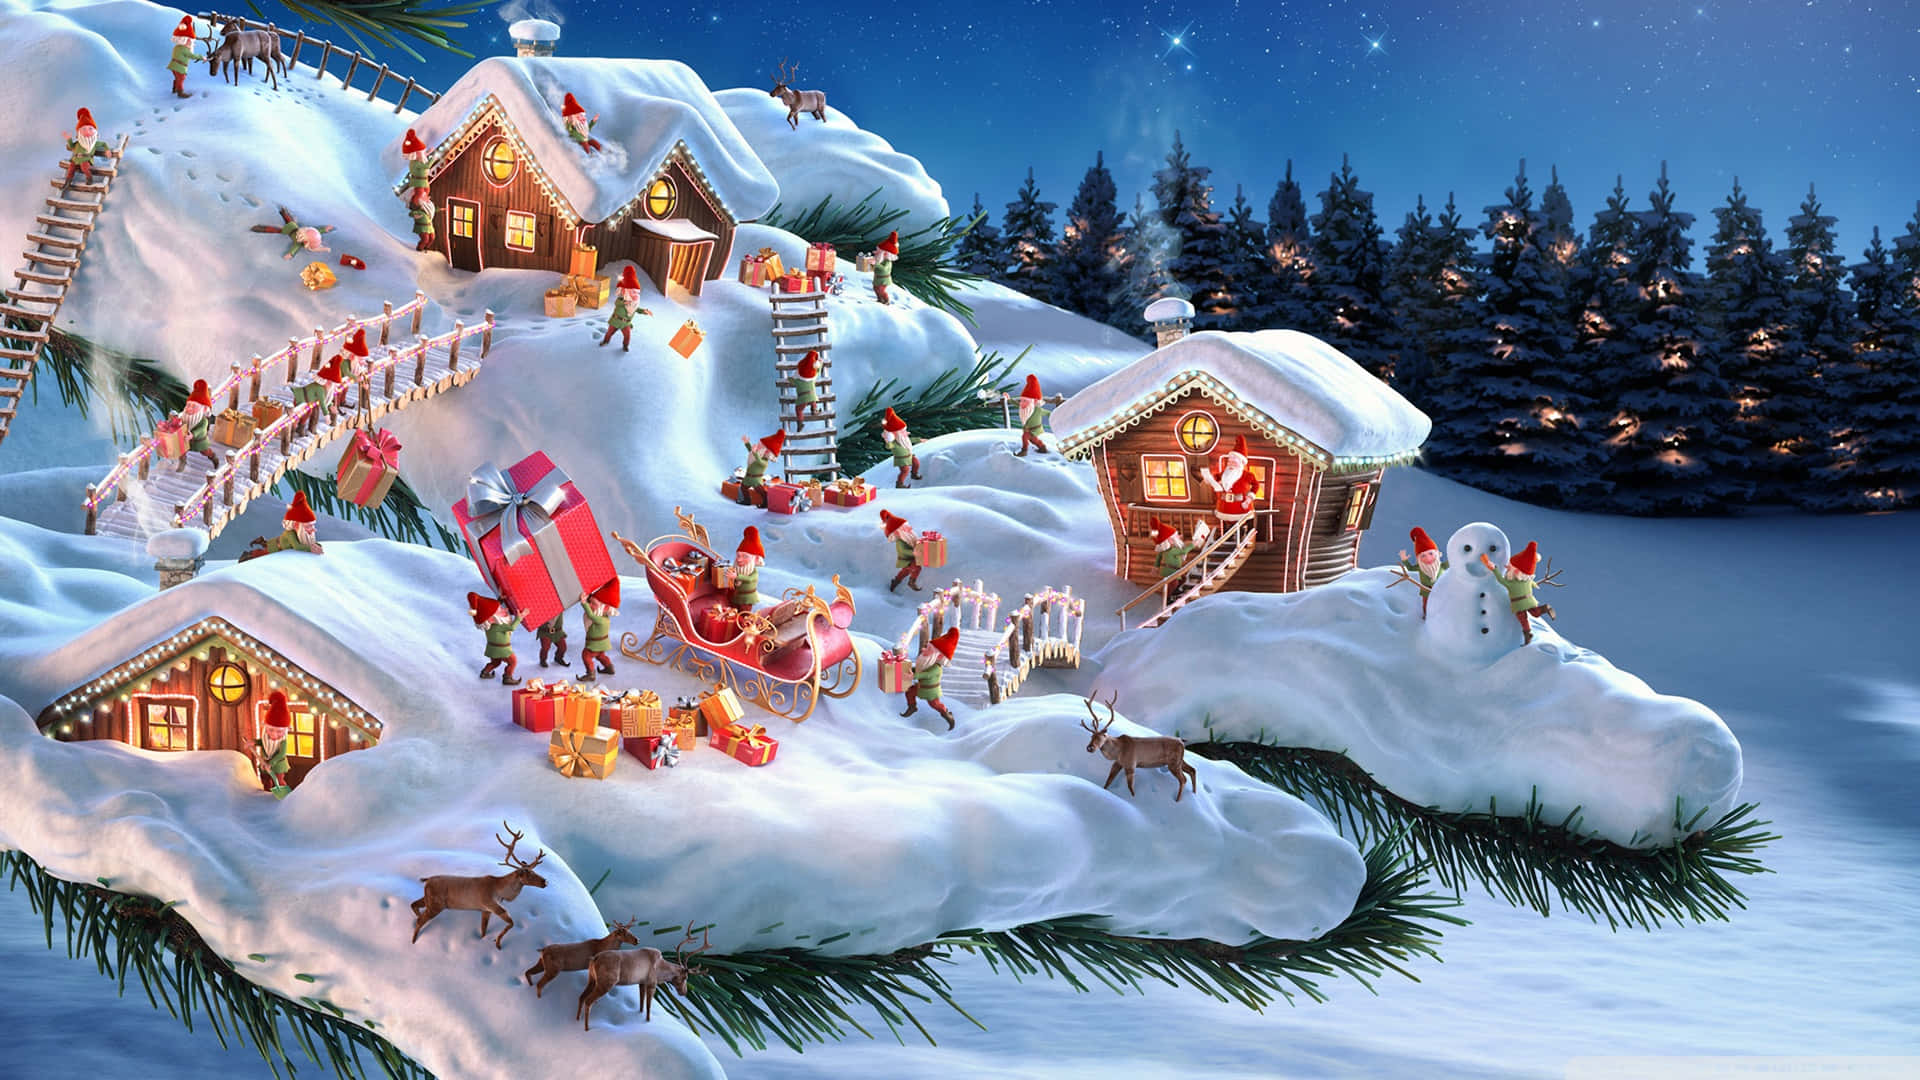 Velkommen til Julbyen - et magisk sted at opleve juleglæden! Wallpaper